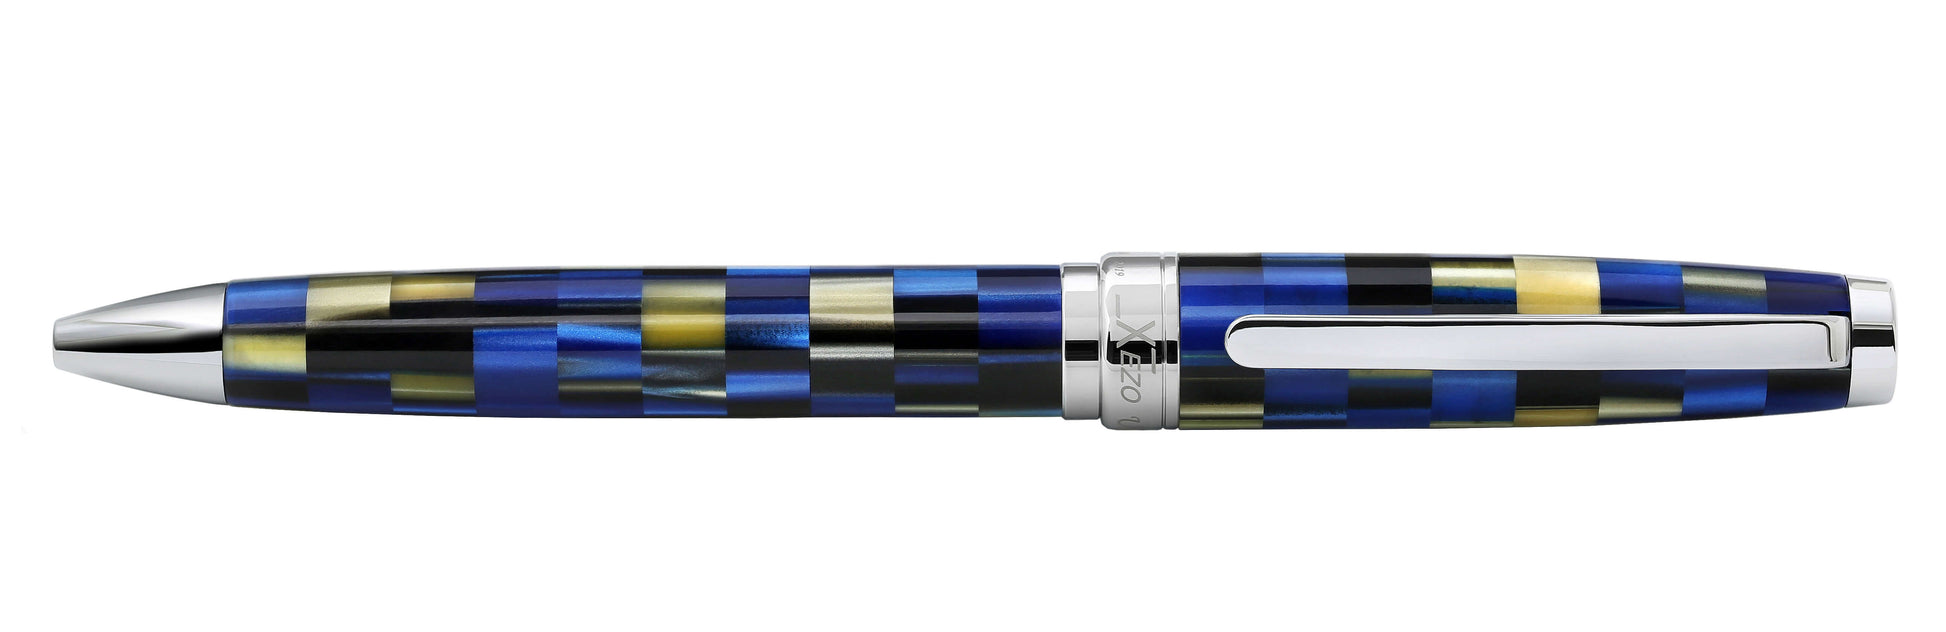 Xezo - Front view of the Urbanite Blue B ballpoint pen